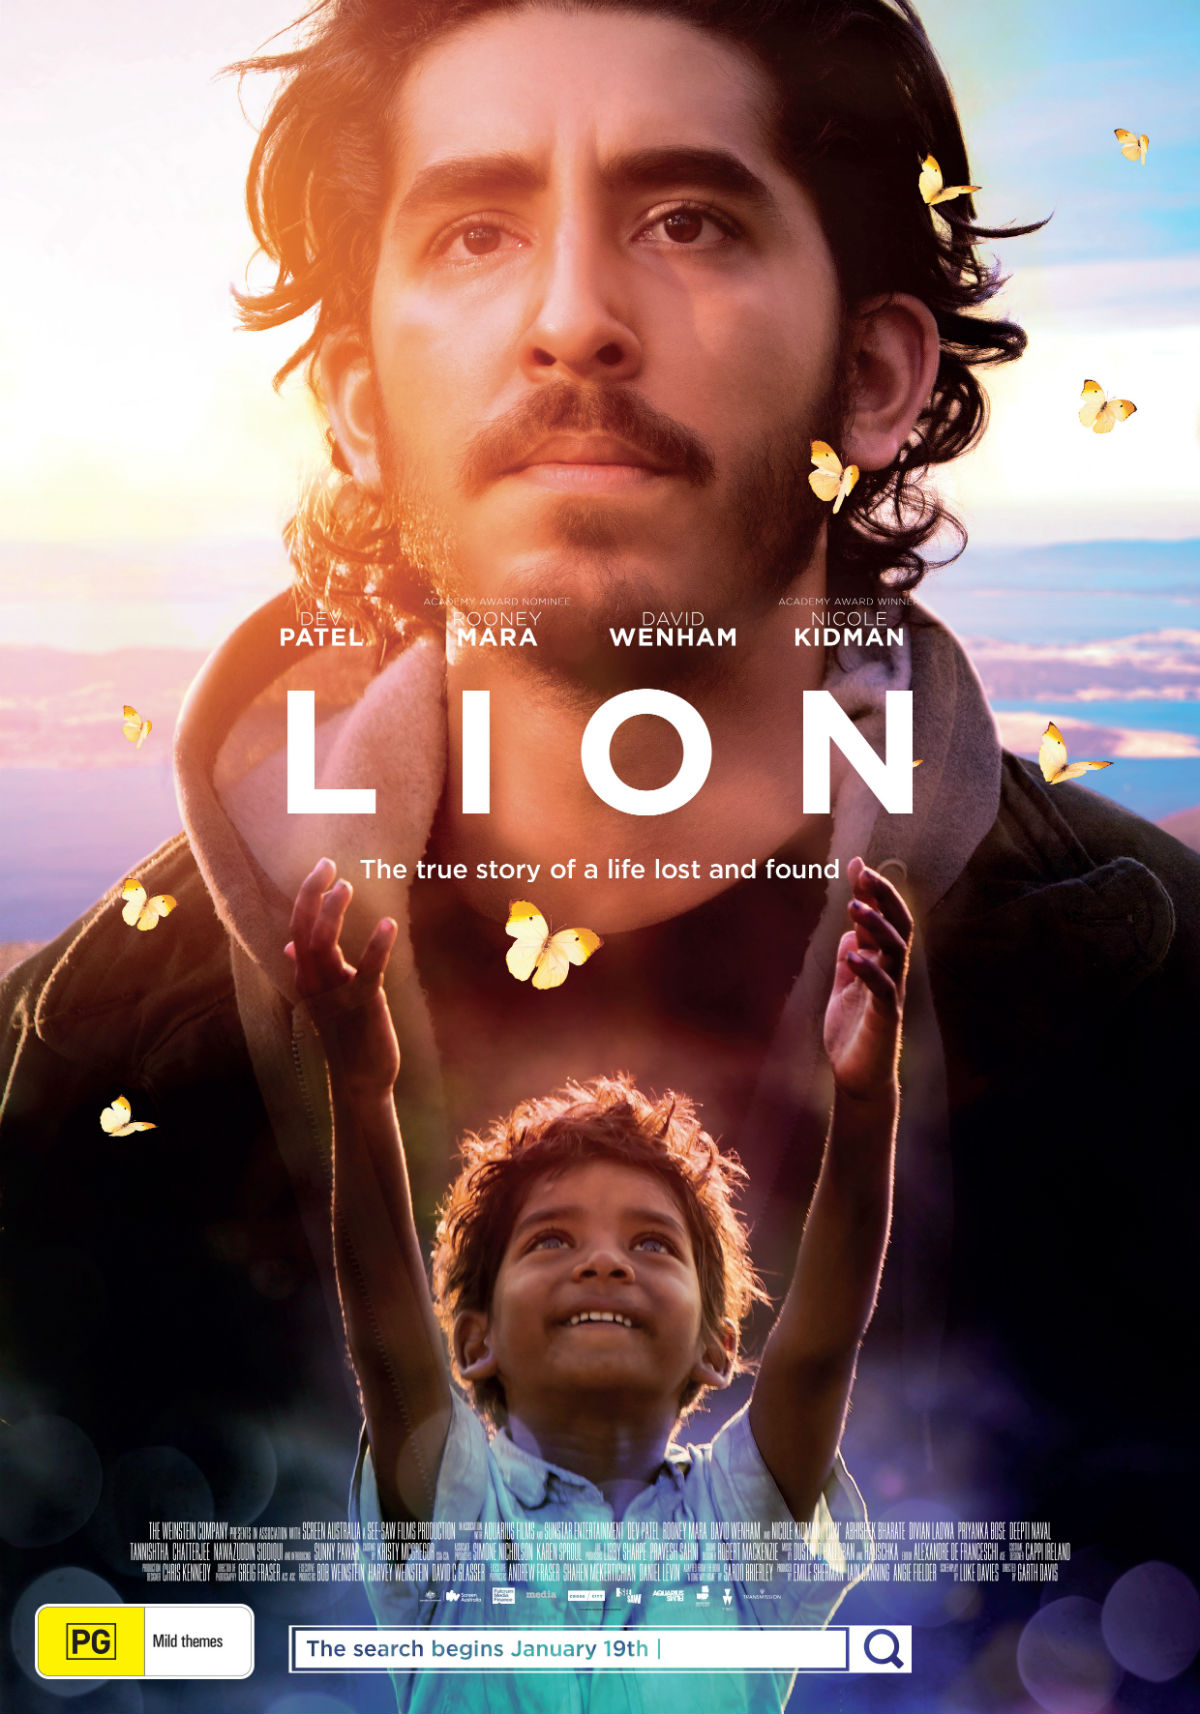 essay on the movie lion